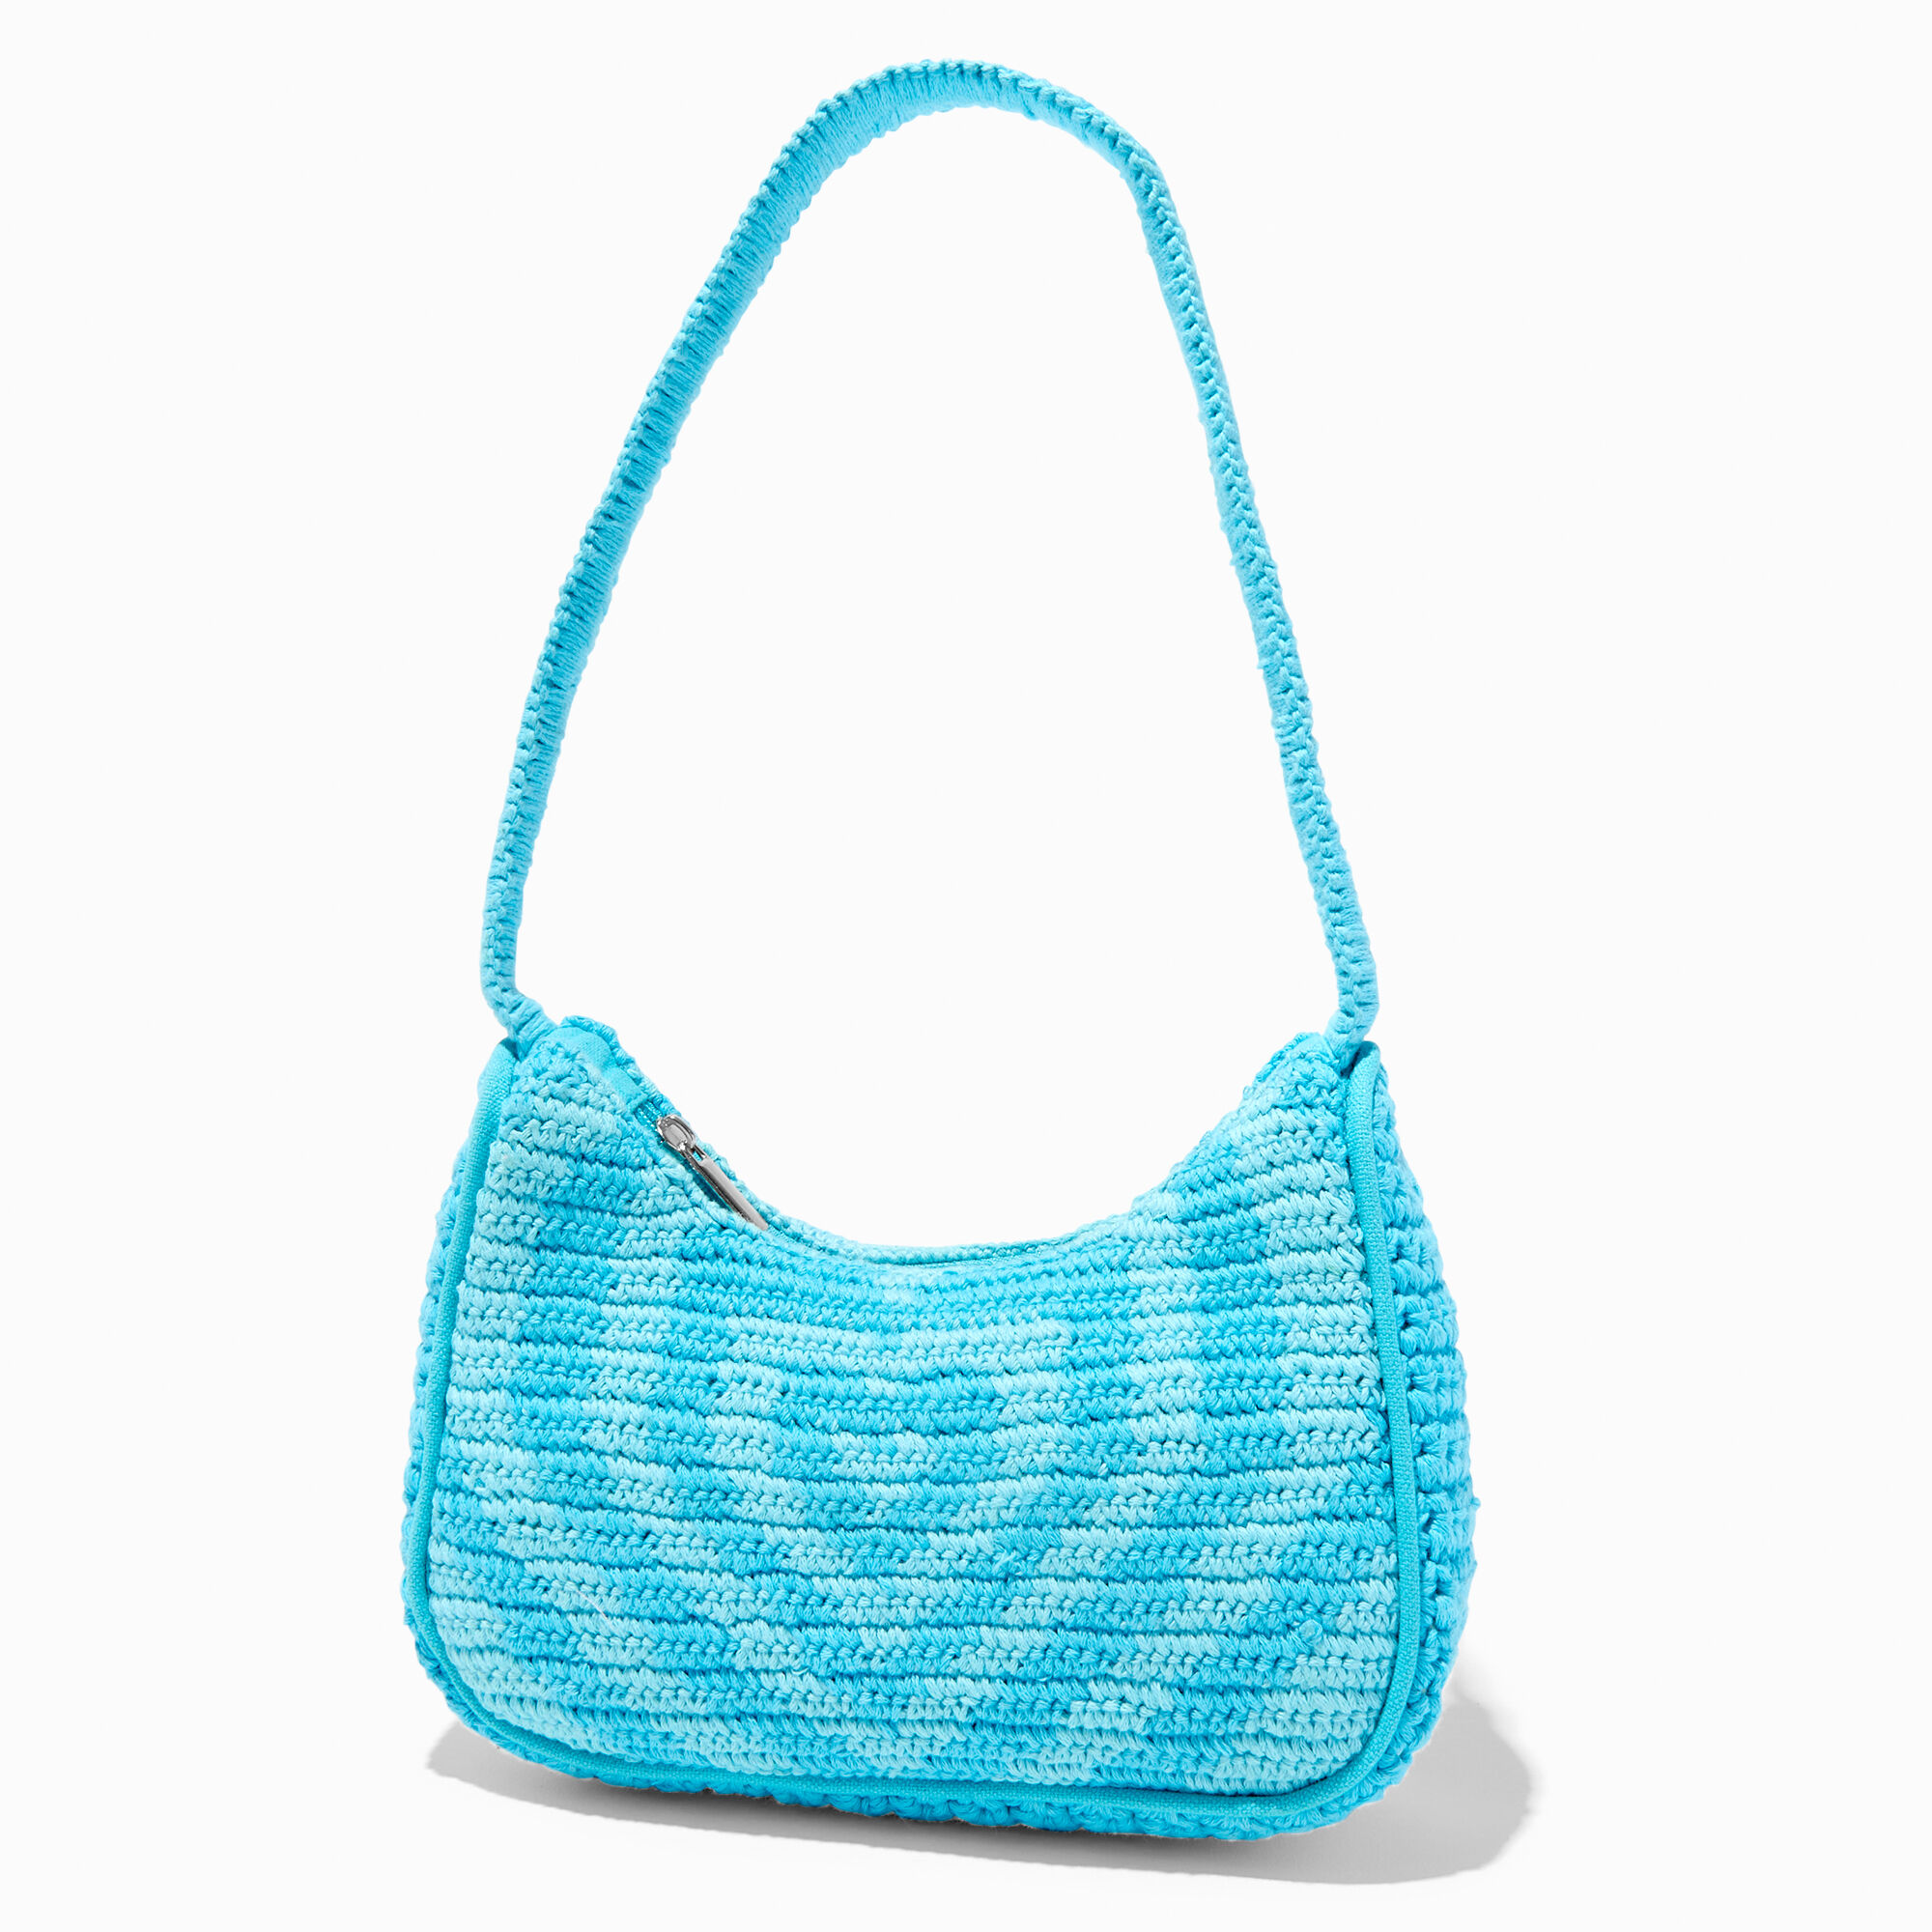 View Claires Crochet Heart Shield Shoulder Handbag Blue information